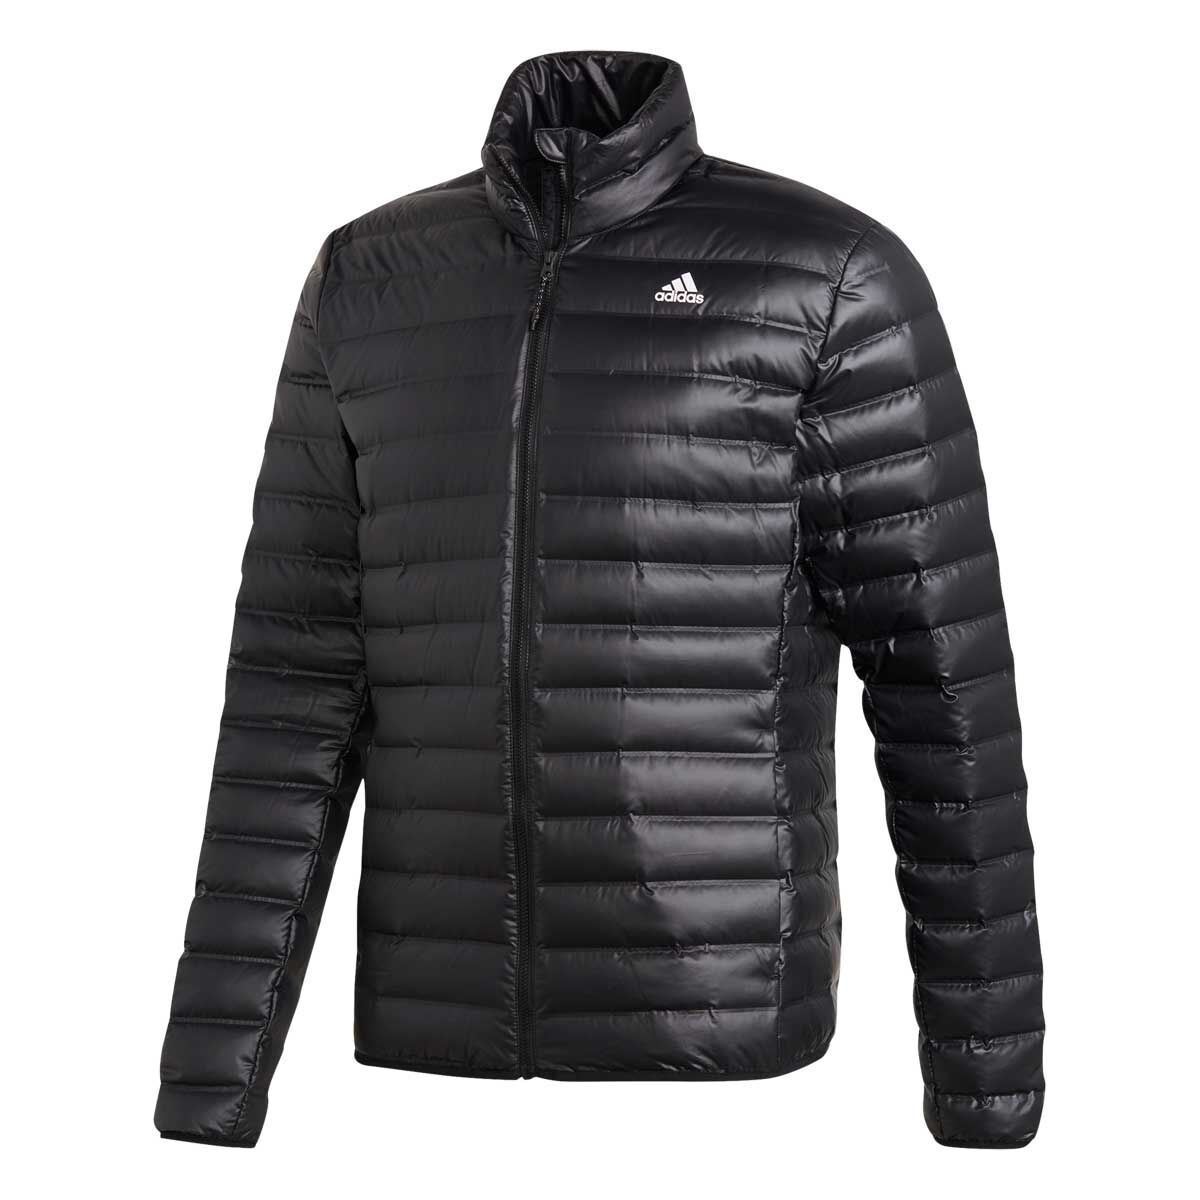 Buy > adidas puffer jacket mens black > in stock